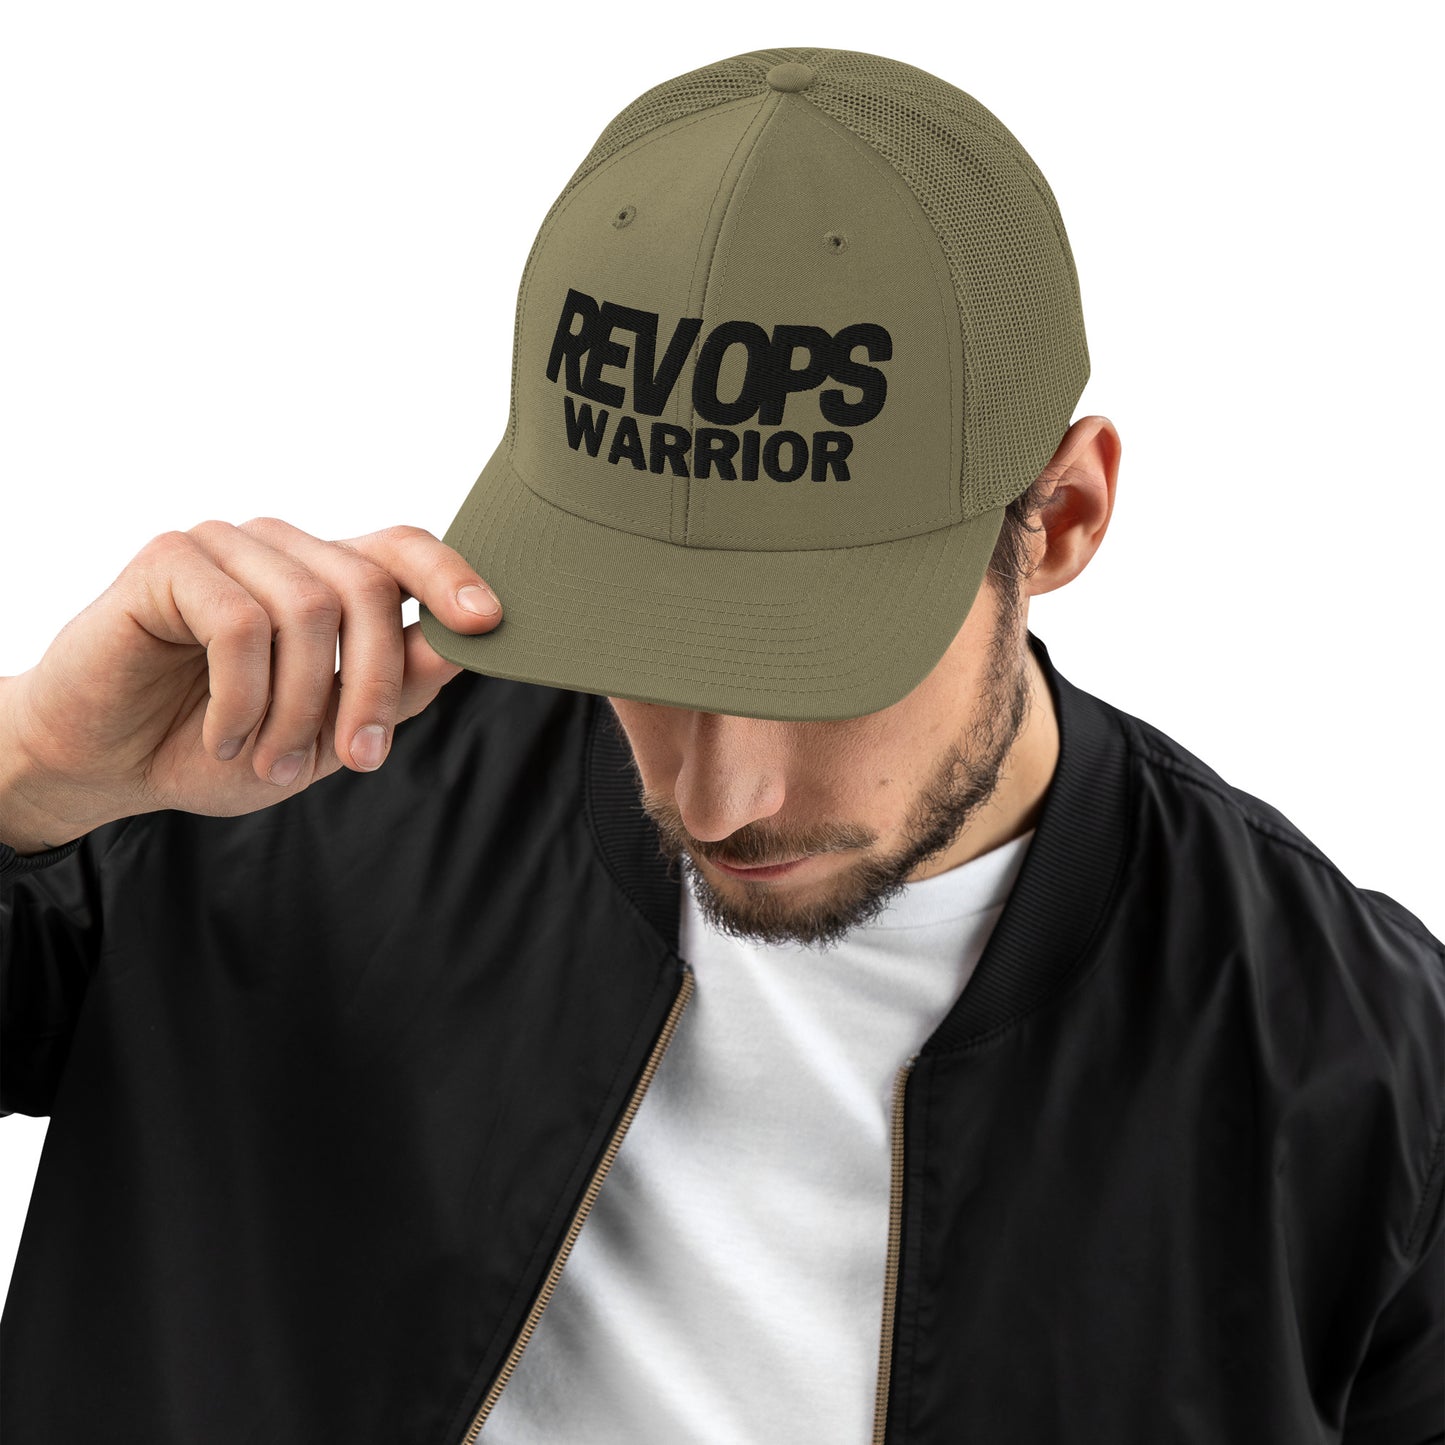 Rev Ops Warrior Black/Olive Mesh Trucker Cap